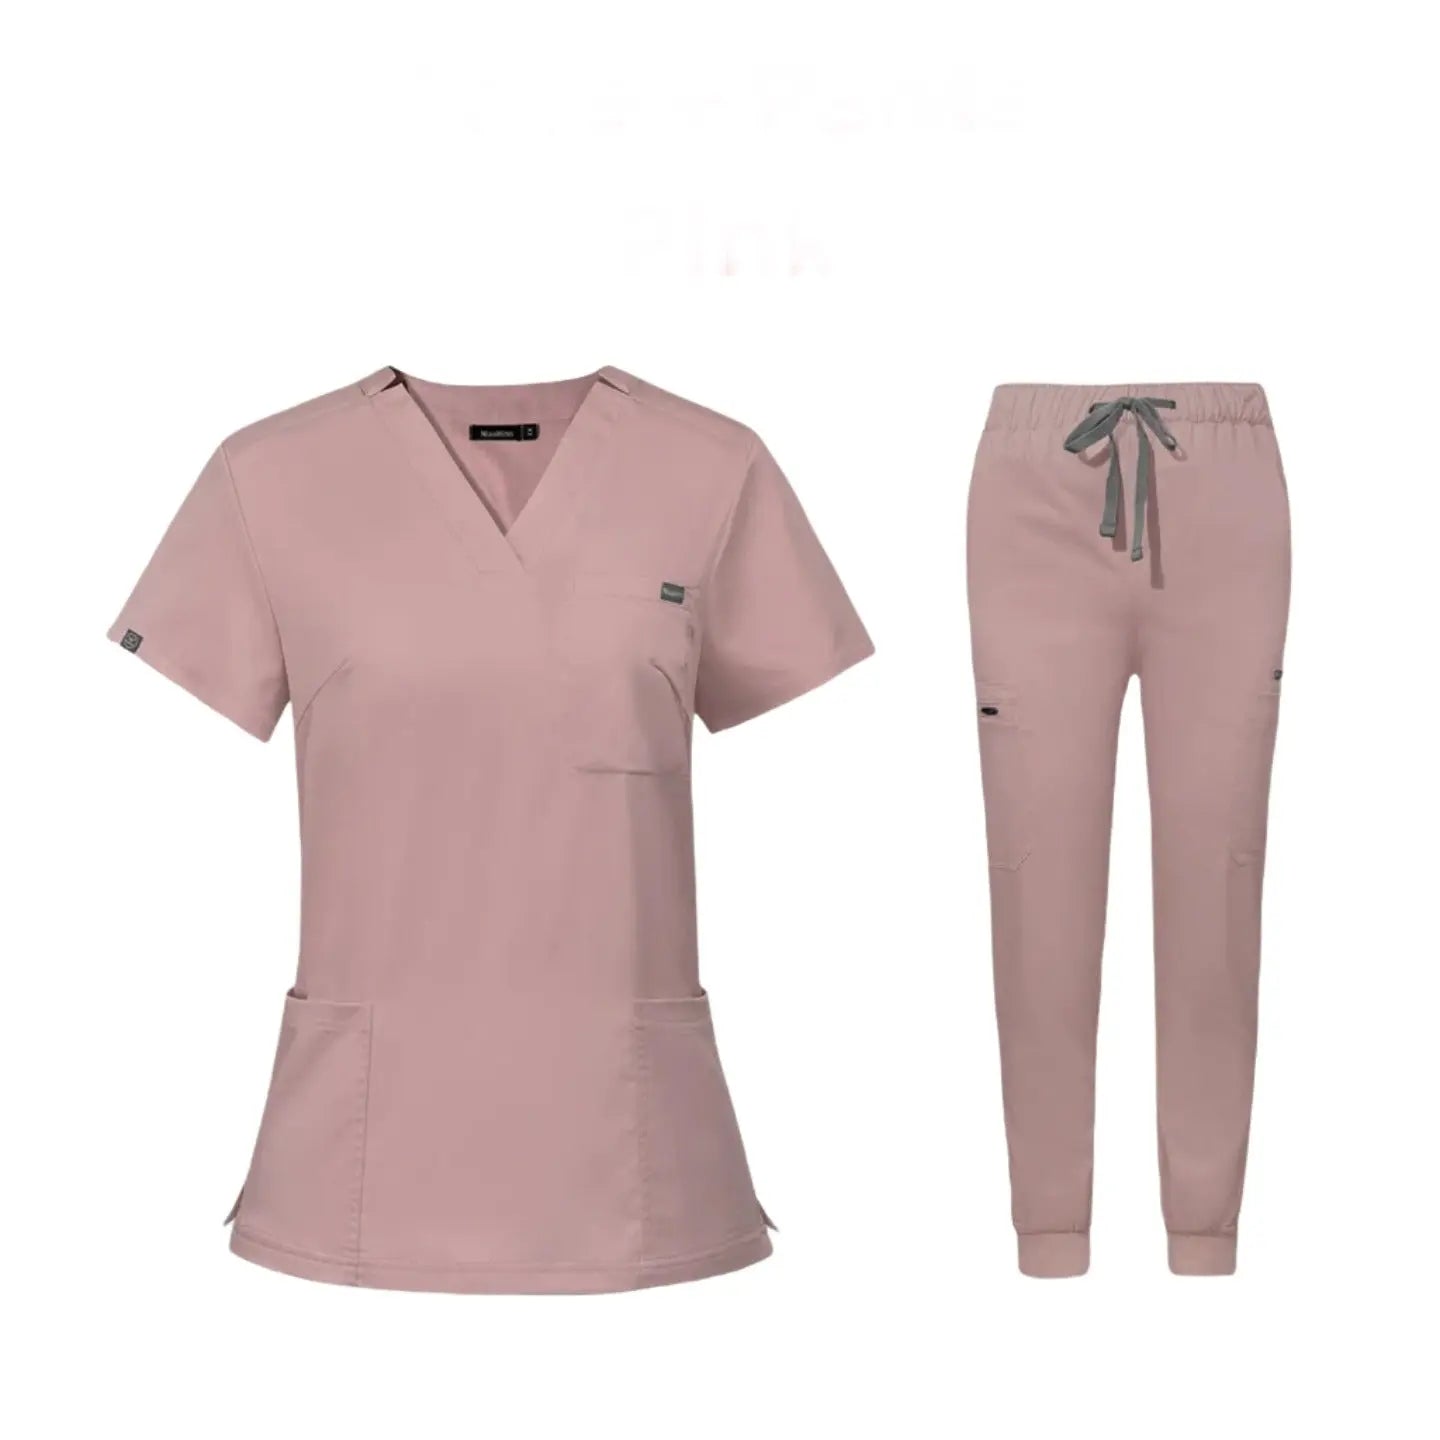 Modern Fit Nurse Attire: Modern Style, Tailored Comfort My Store